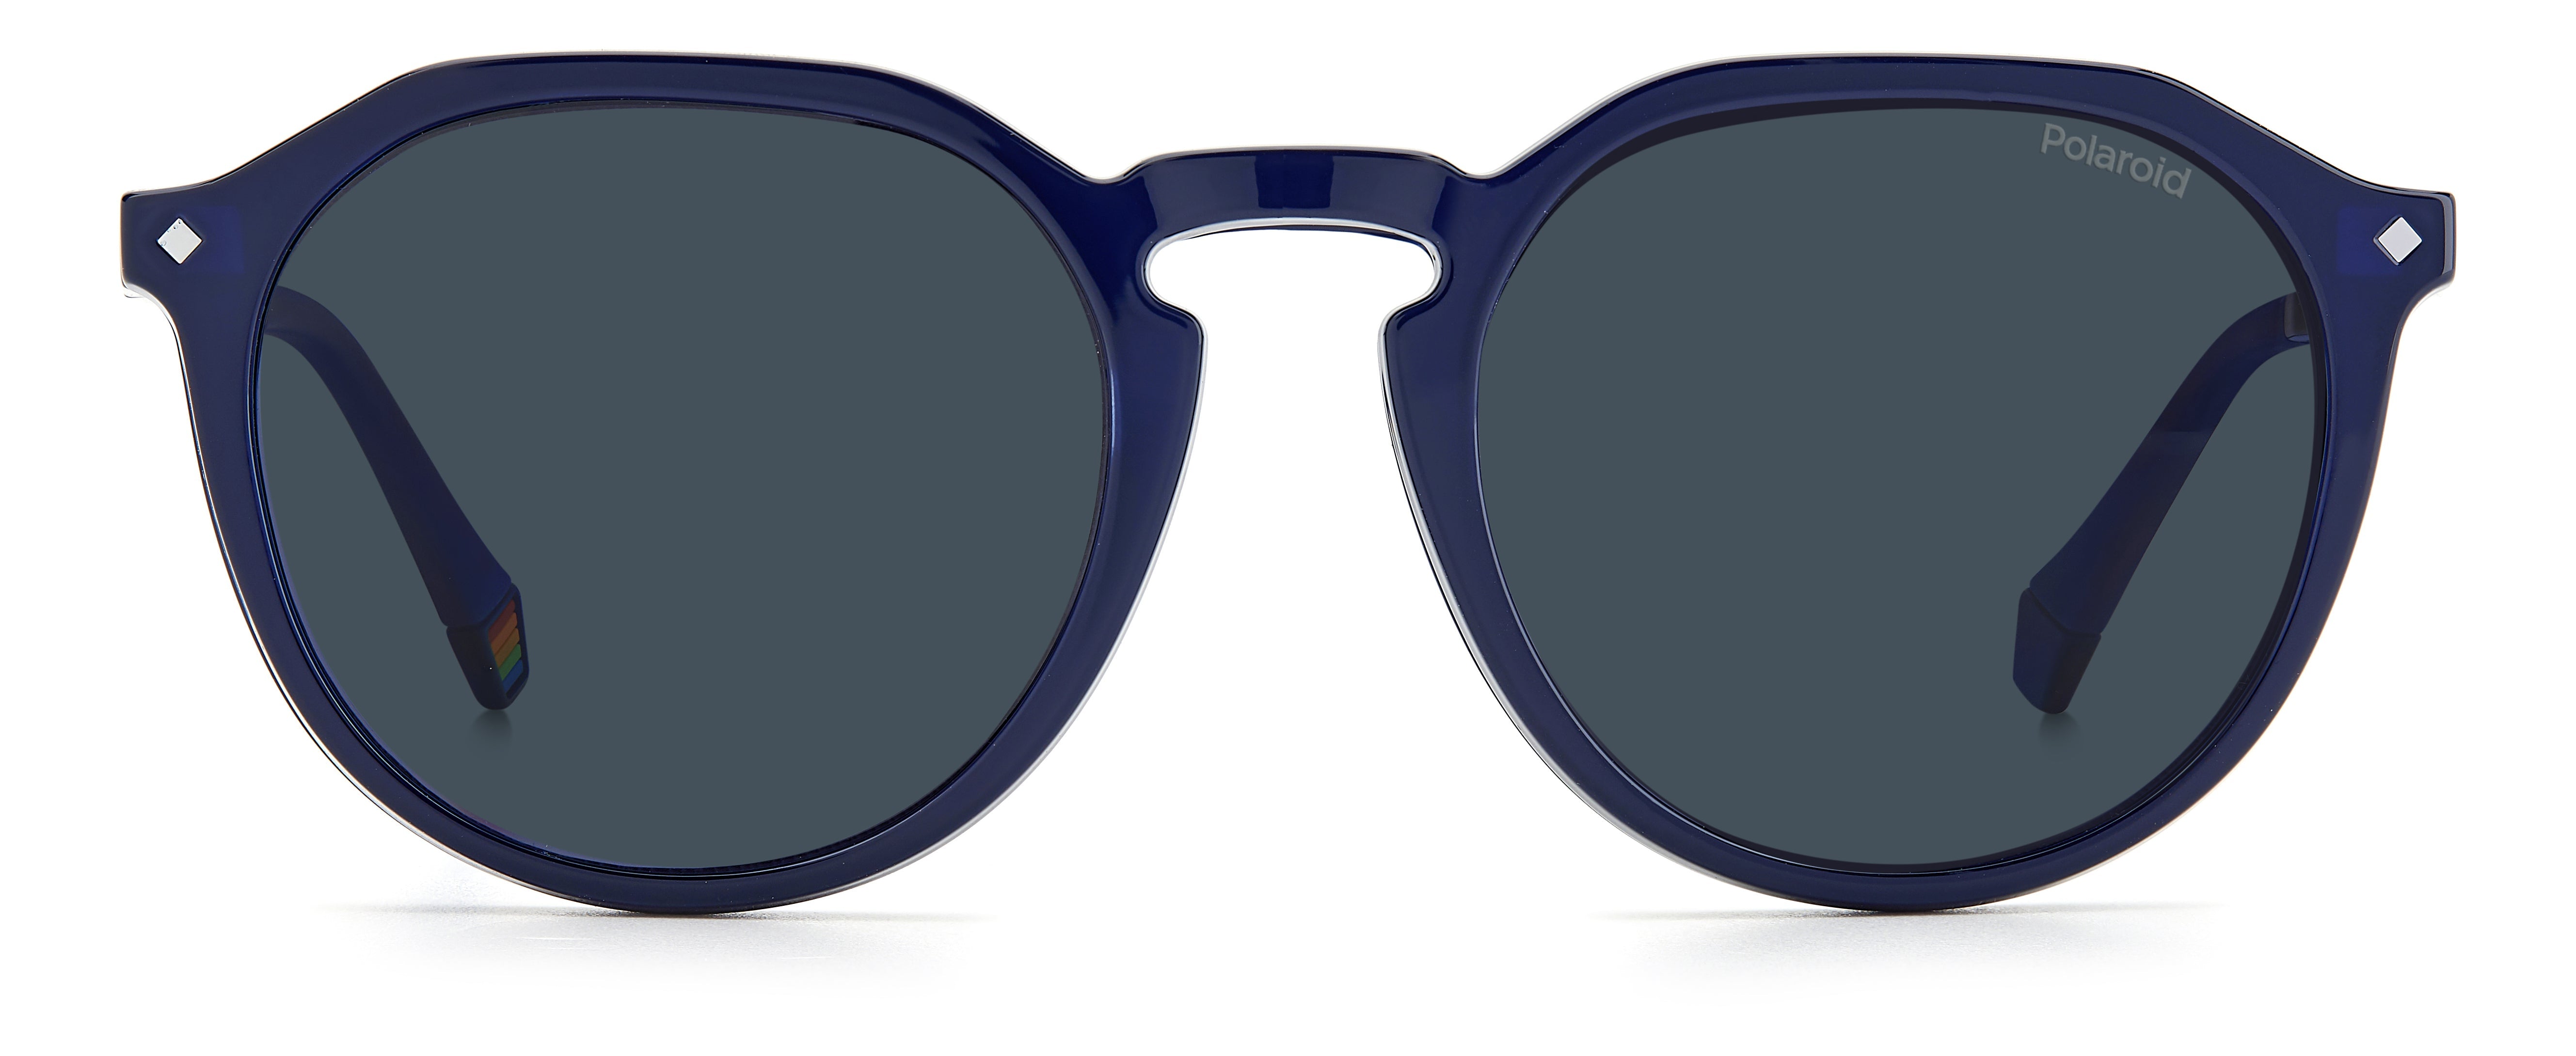 Polaroid Geometrical Sunglasses